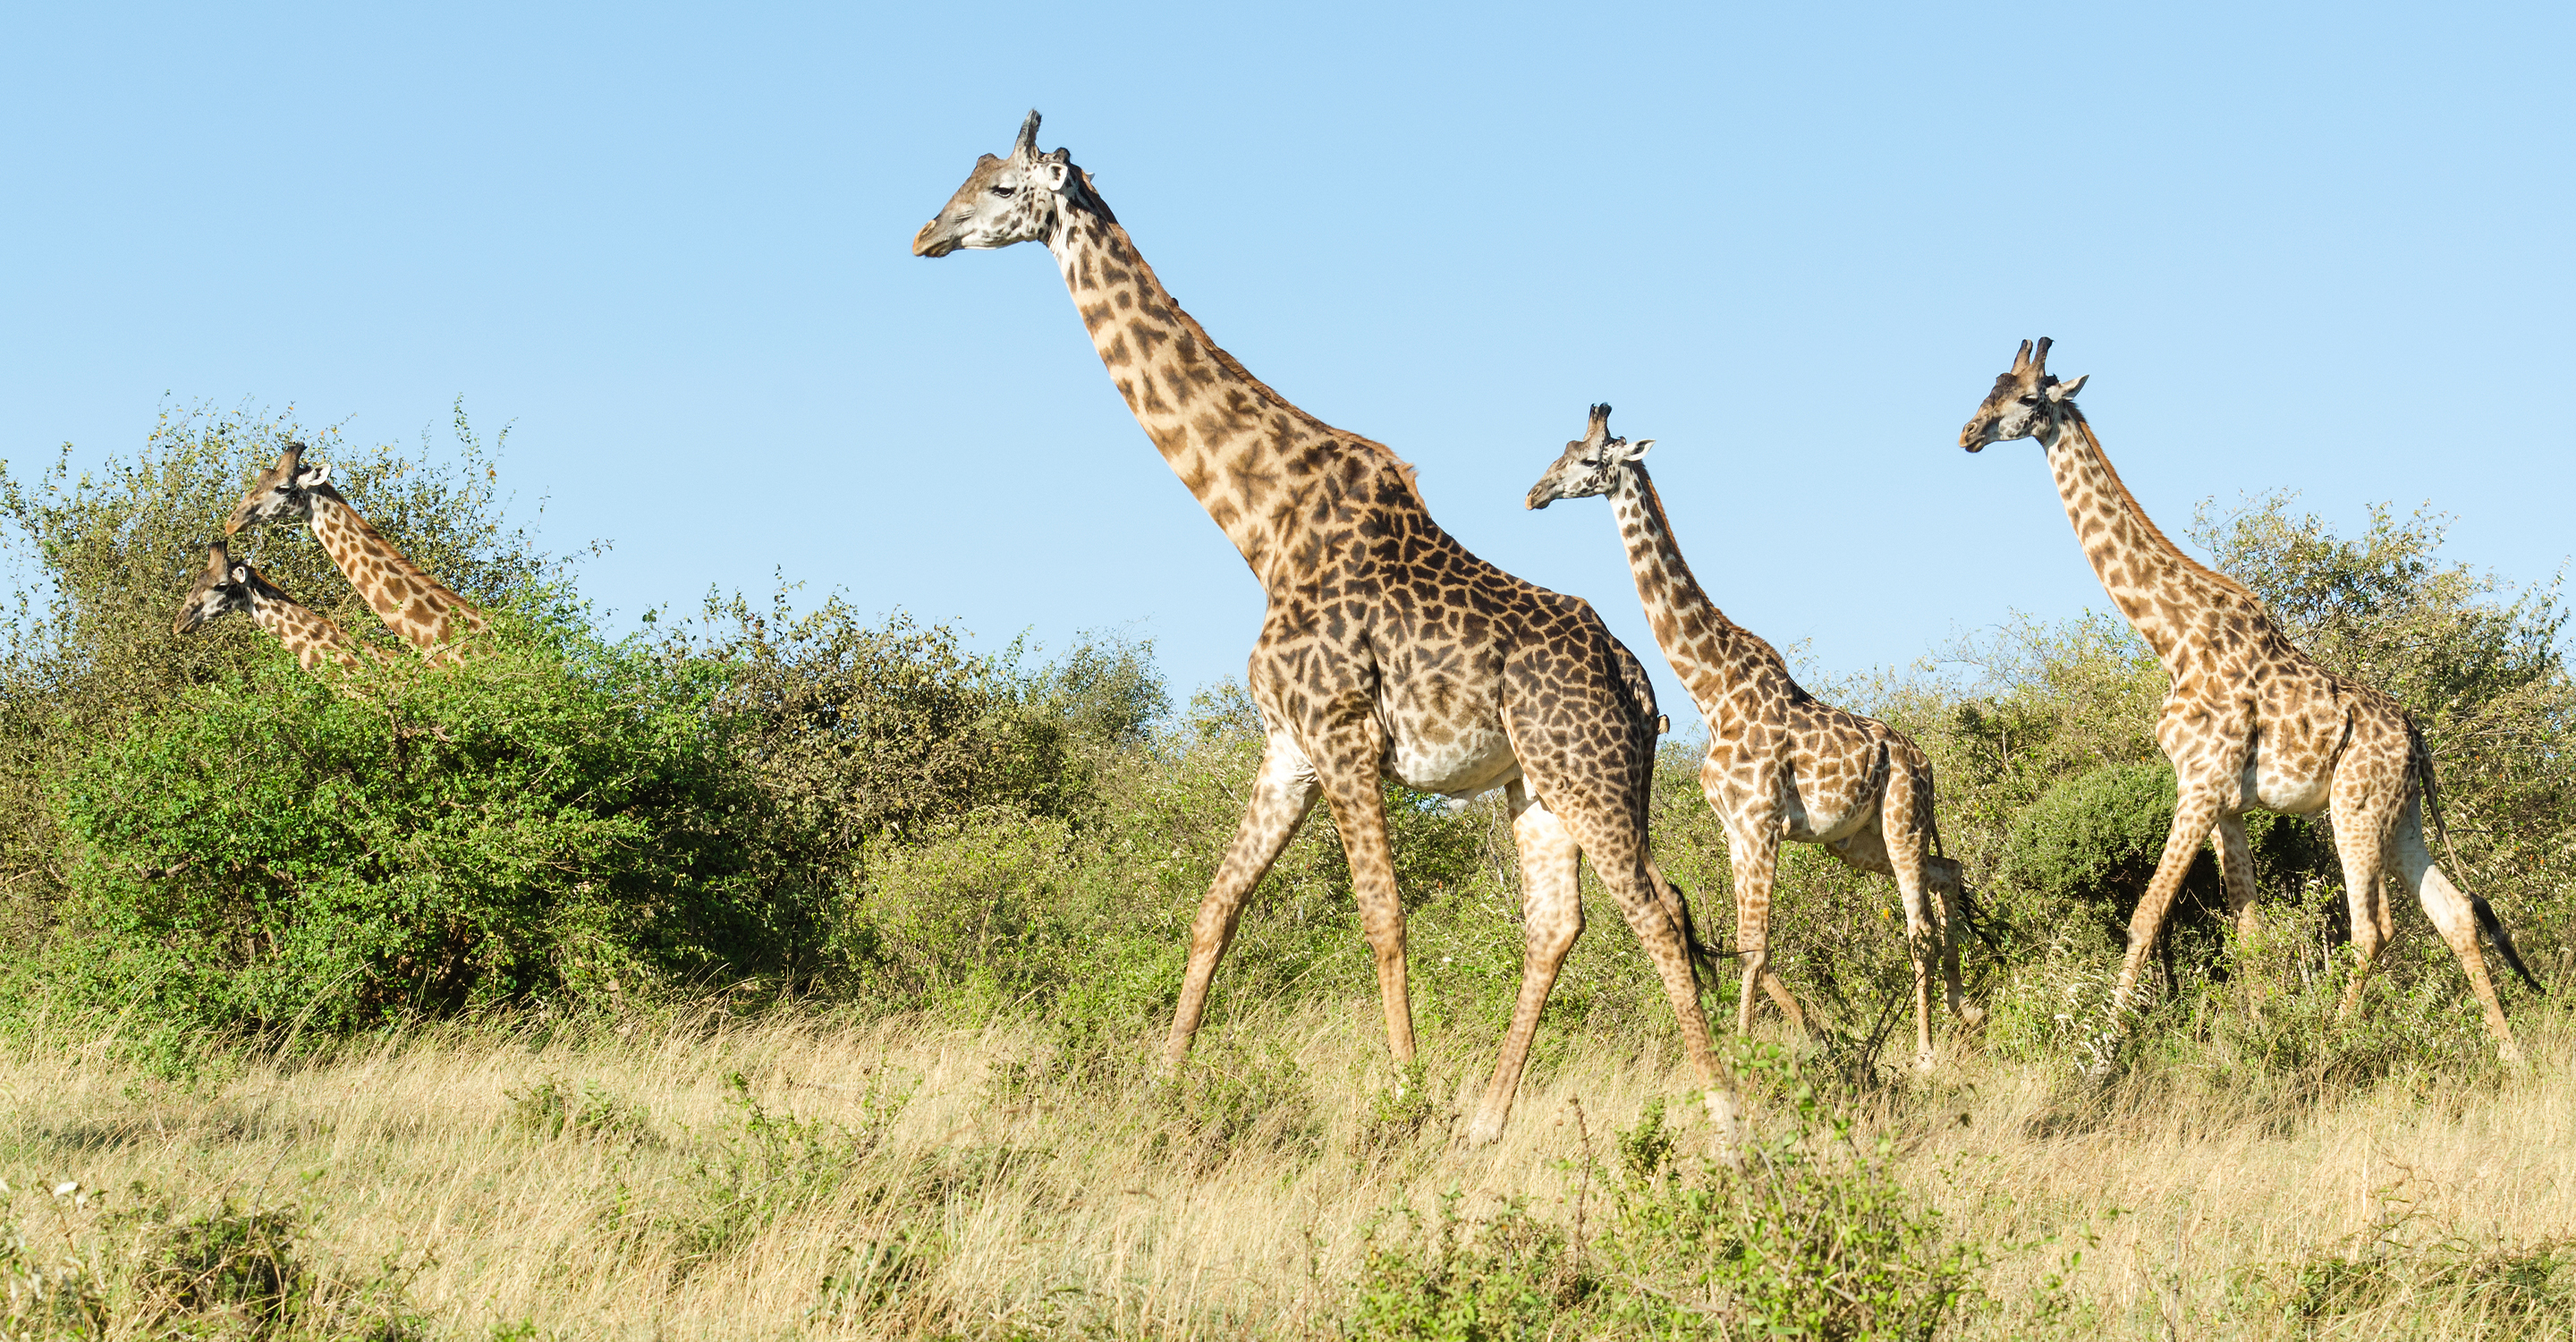 Five giraffes walk together in Maasai Mara National Reserve, Kenya